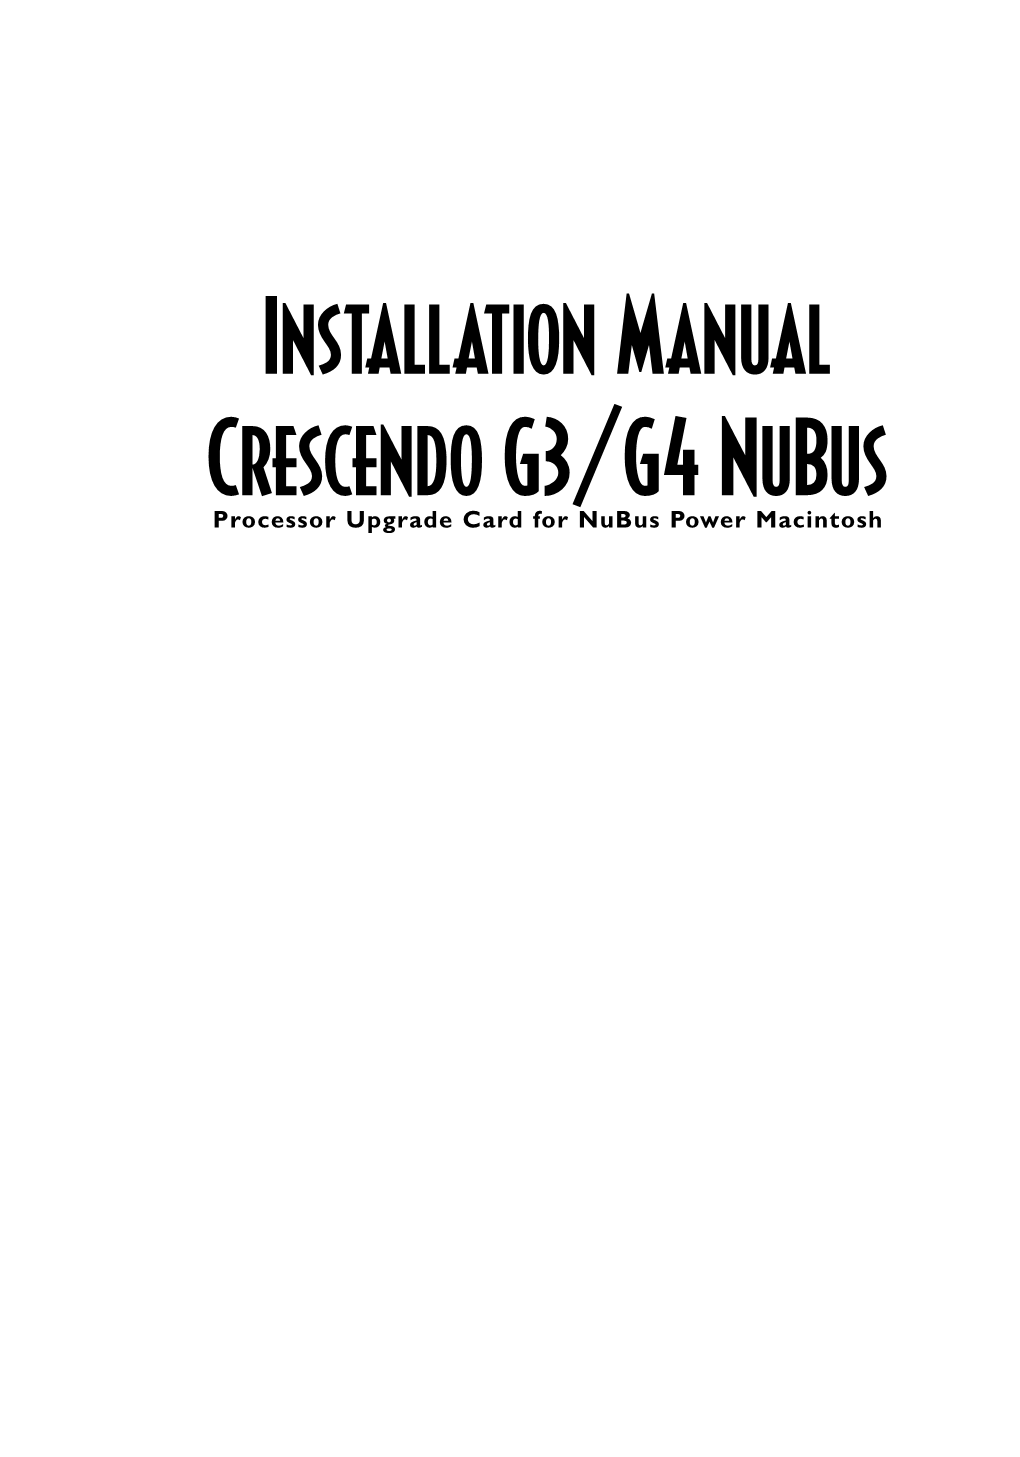 Installation Manual Crescendo G3/G4 Nubus